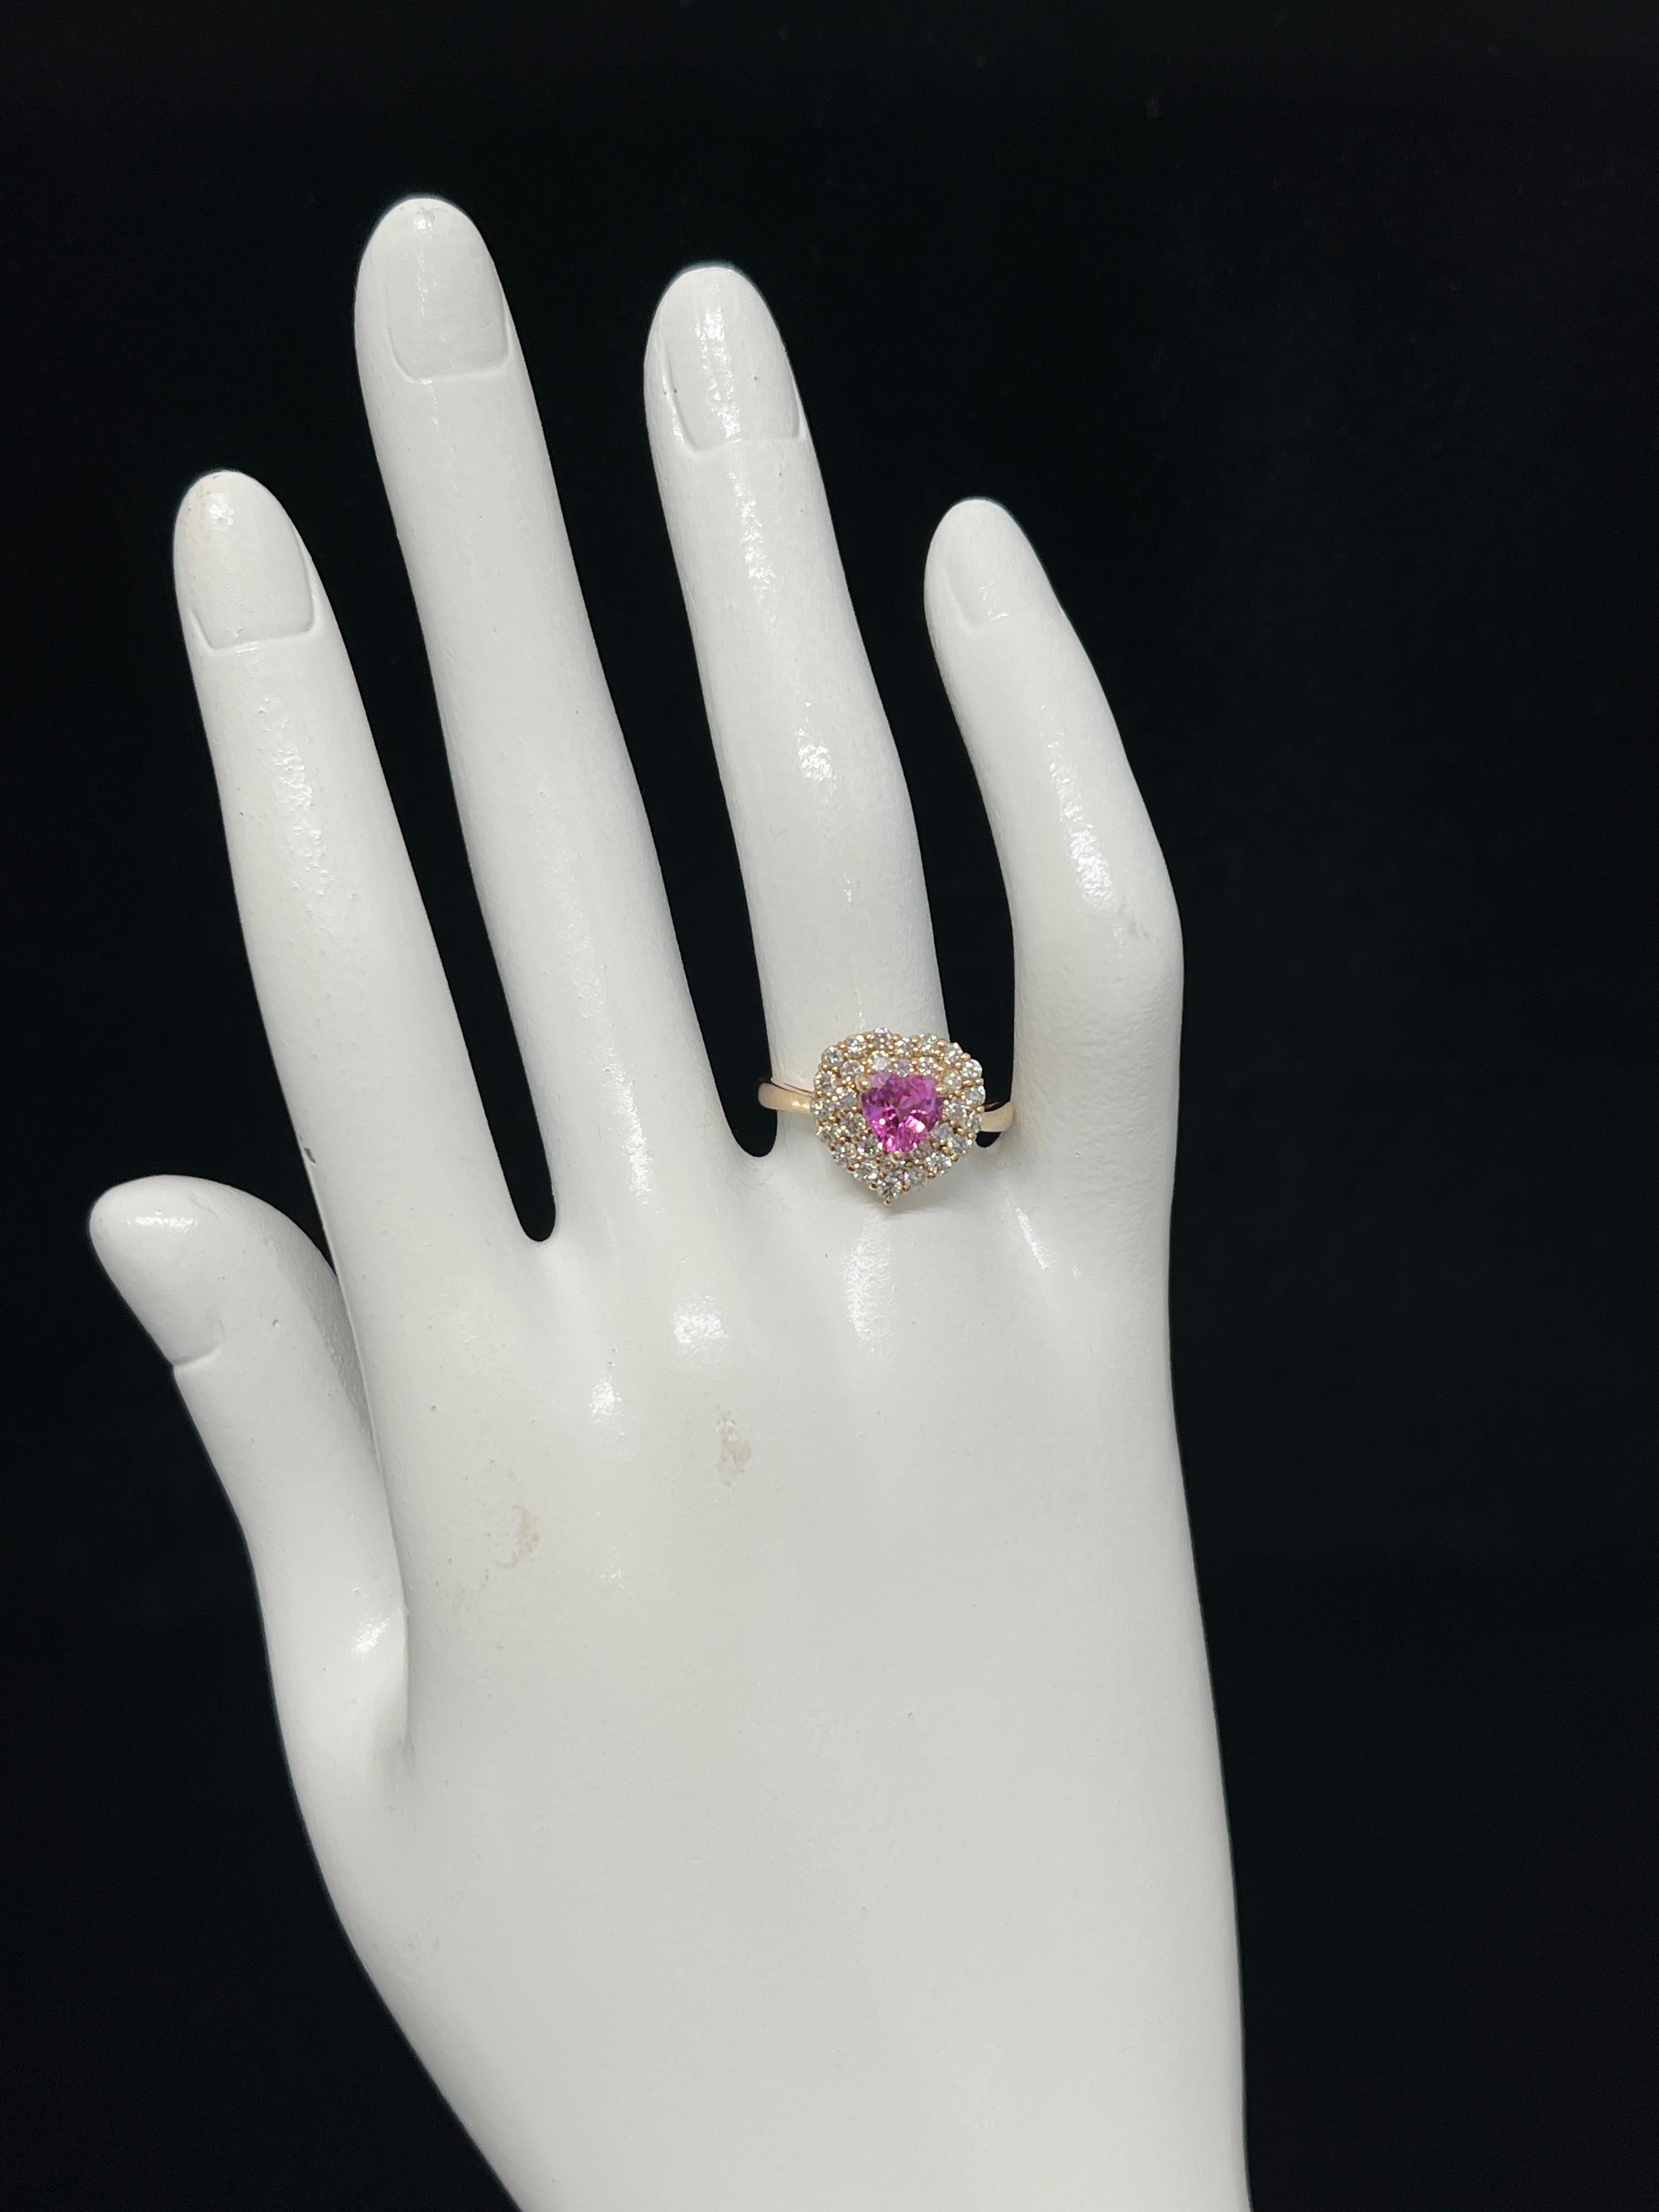 1.06 Carat Heart-Cut Pink Sapphire and Diamond Ring Set in 18 Karat Pink Gold 1